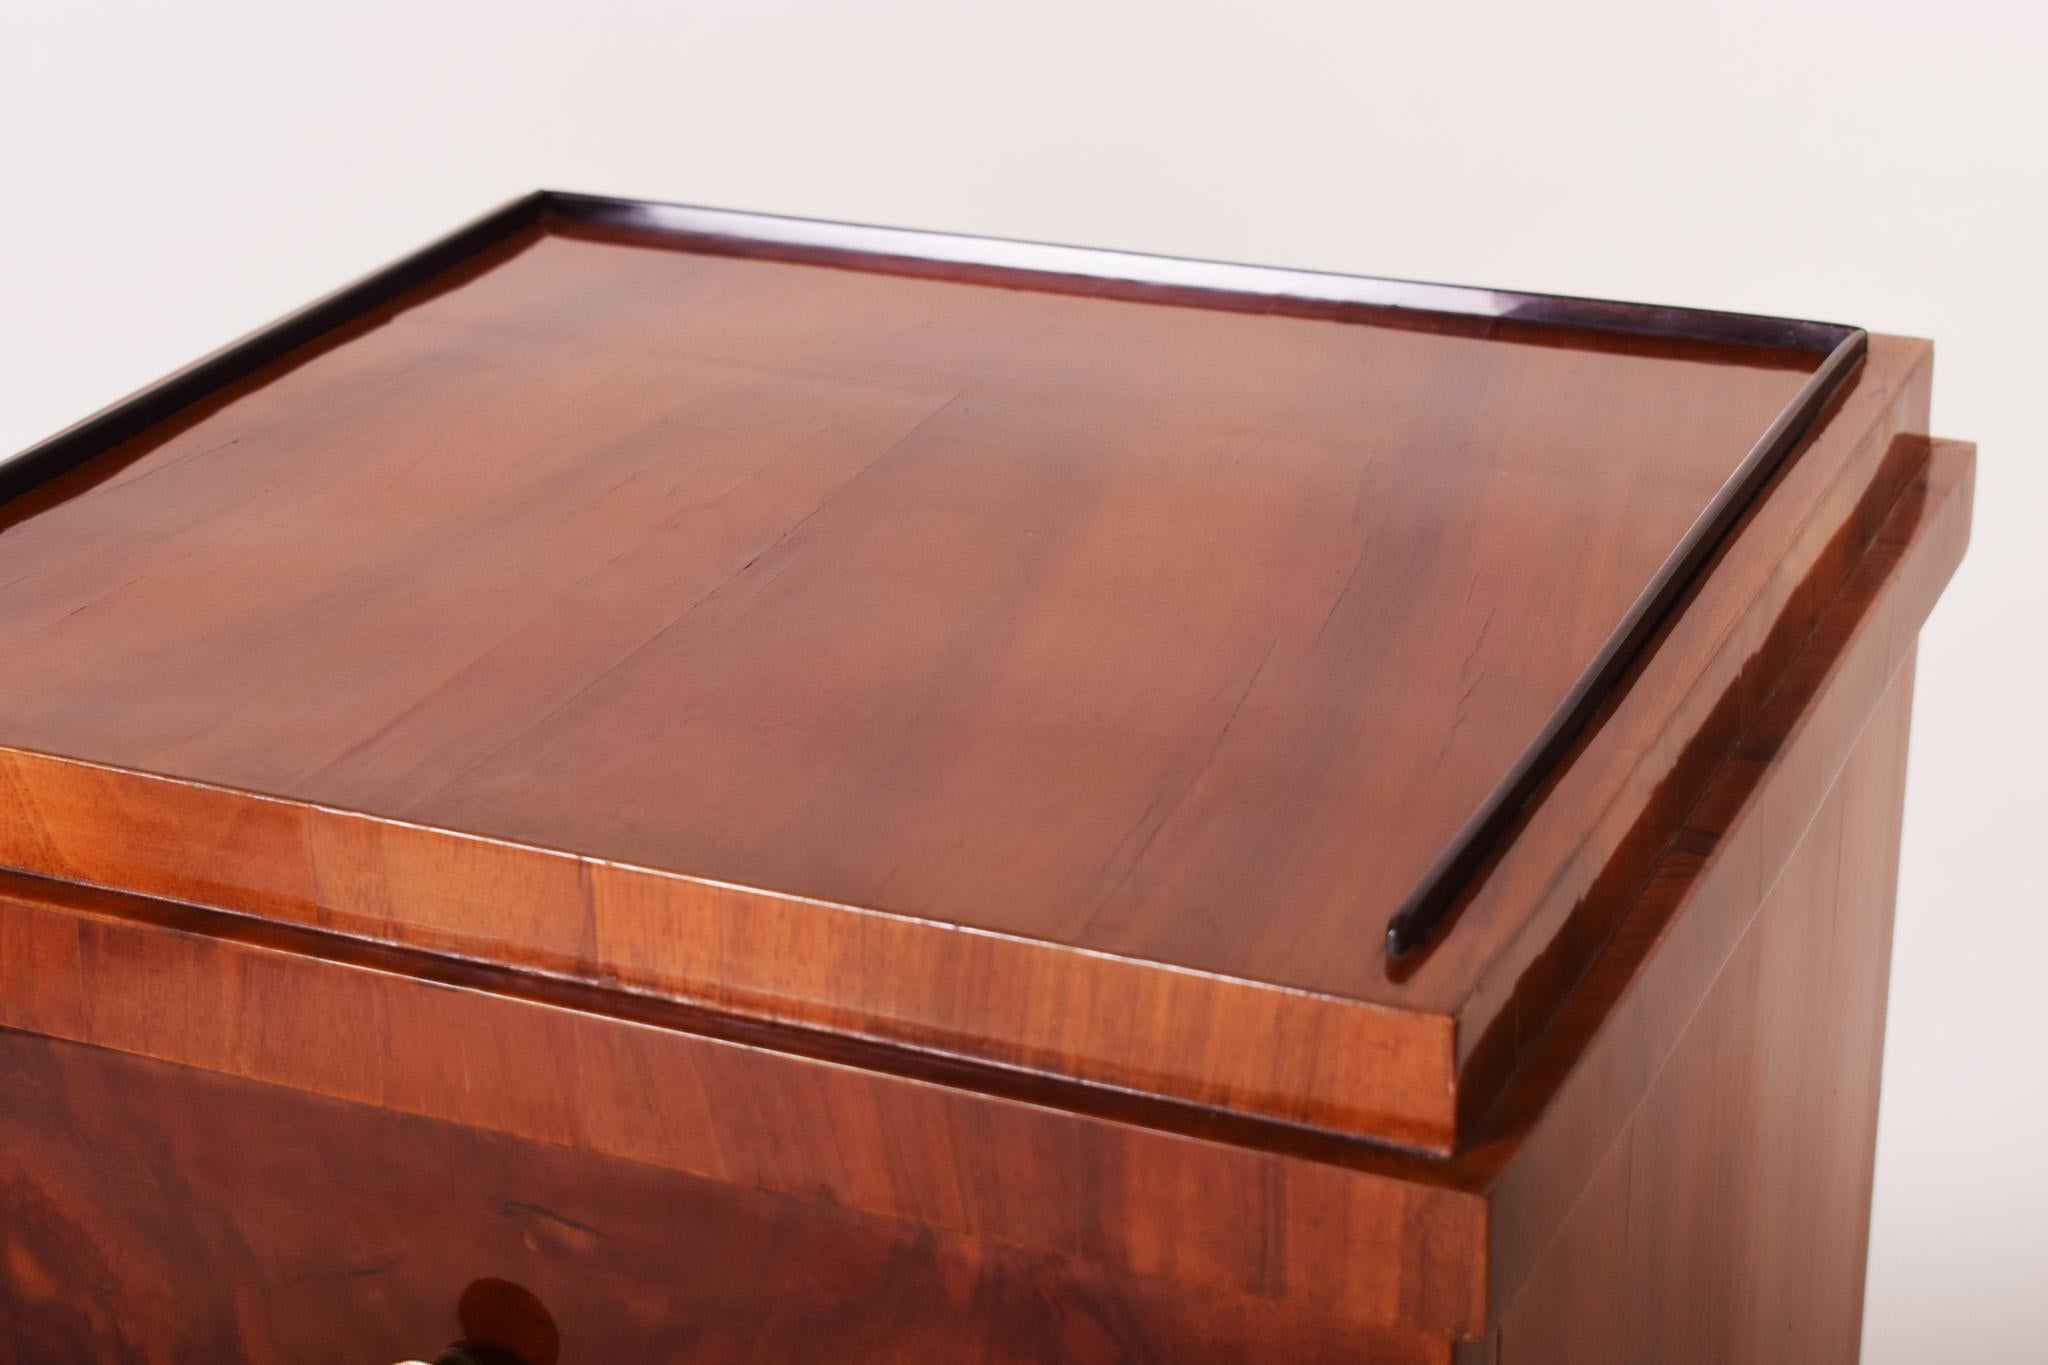 Wood Czech Cubical Biedermeier Walnut Bed-Side Table, 19th Century, Period 1830-1839